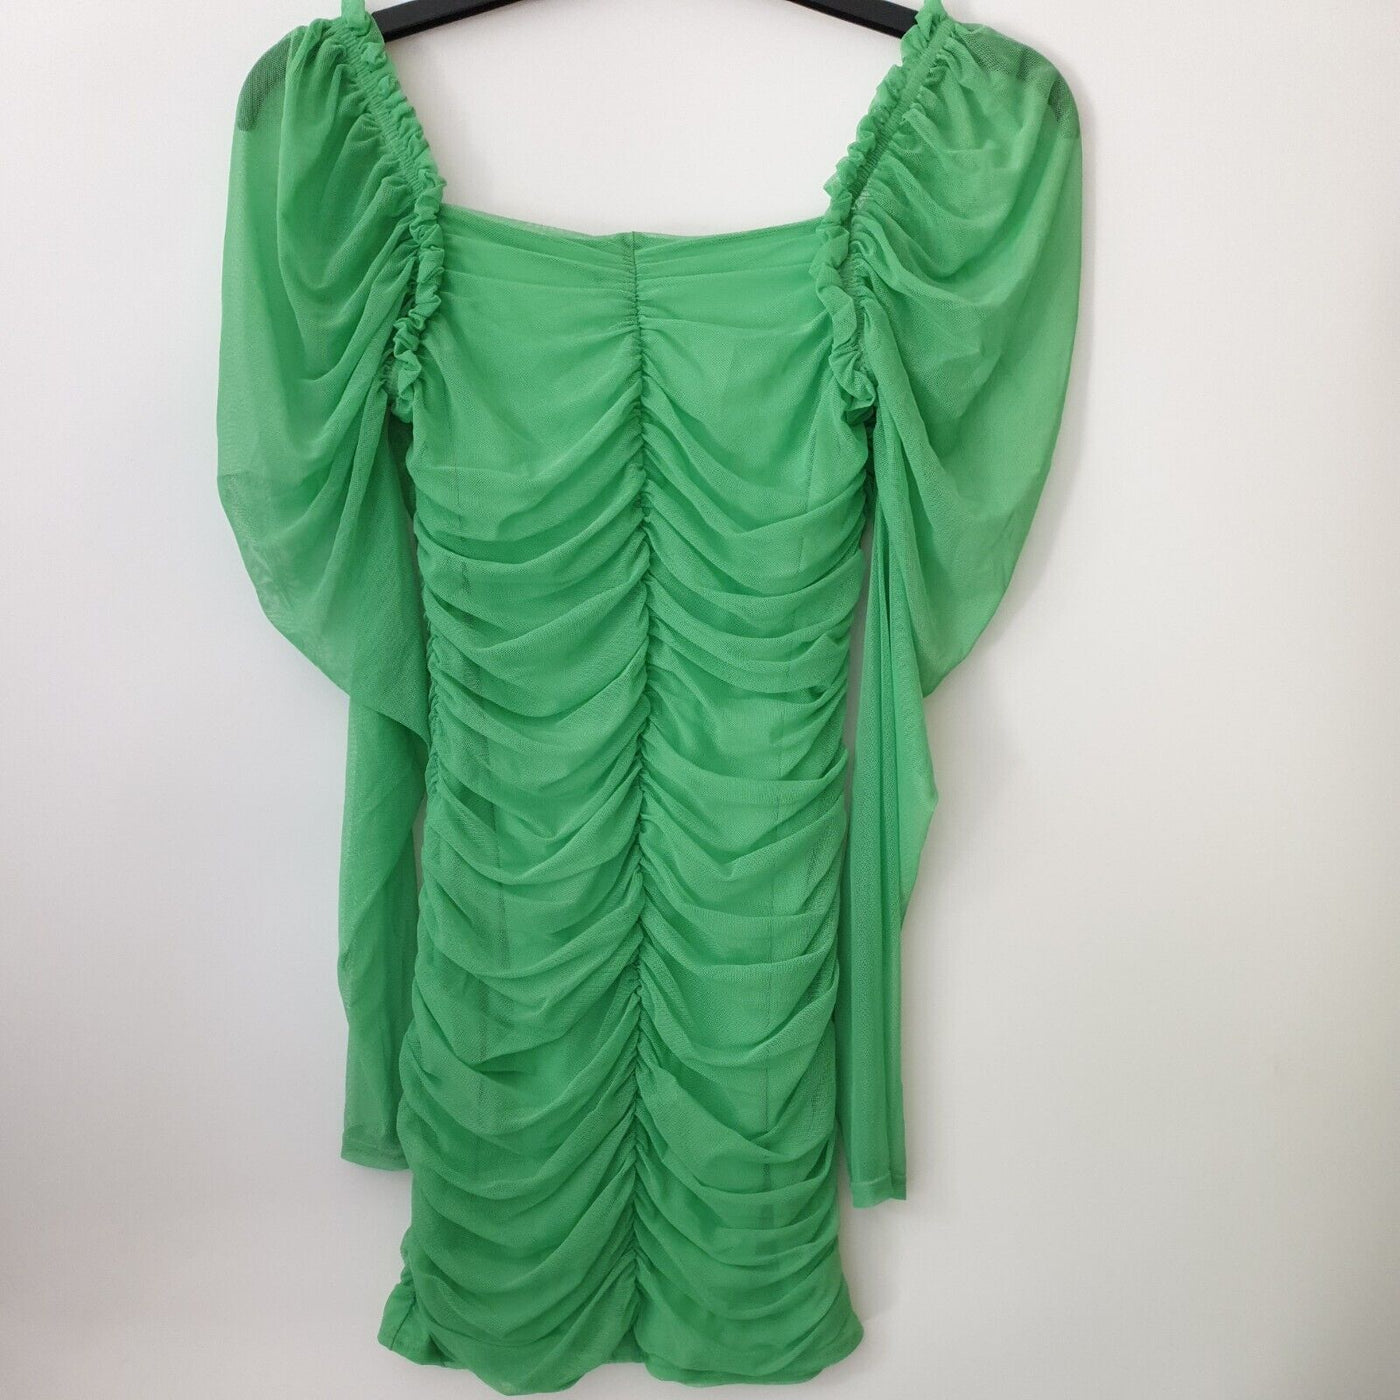 missguided Dress mesh ruched Green Uk12****Ref V232